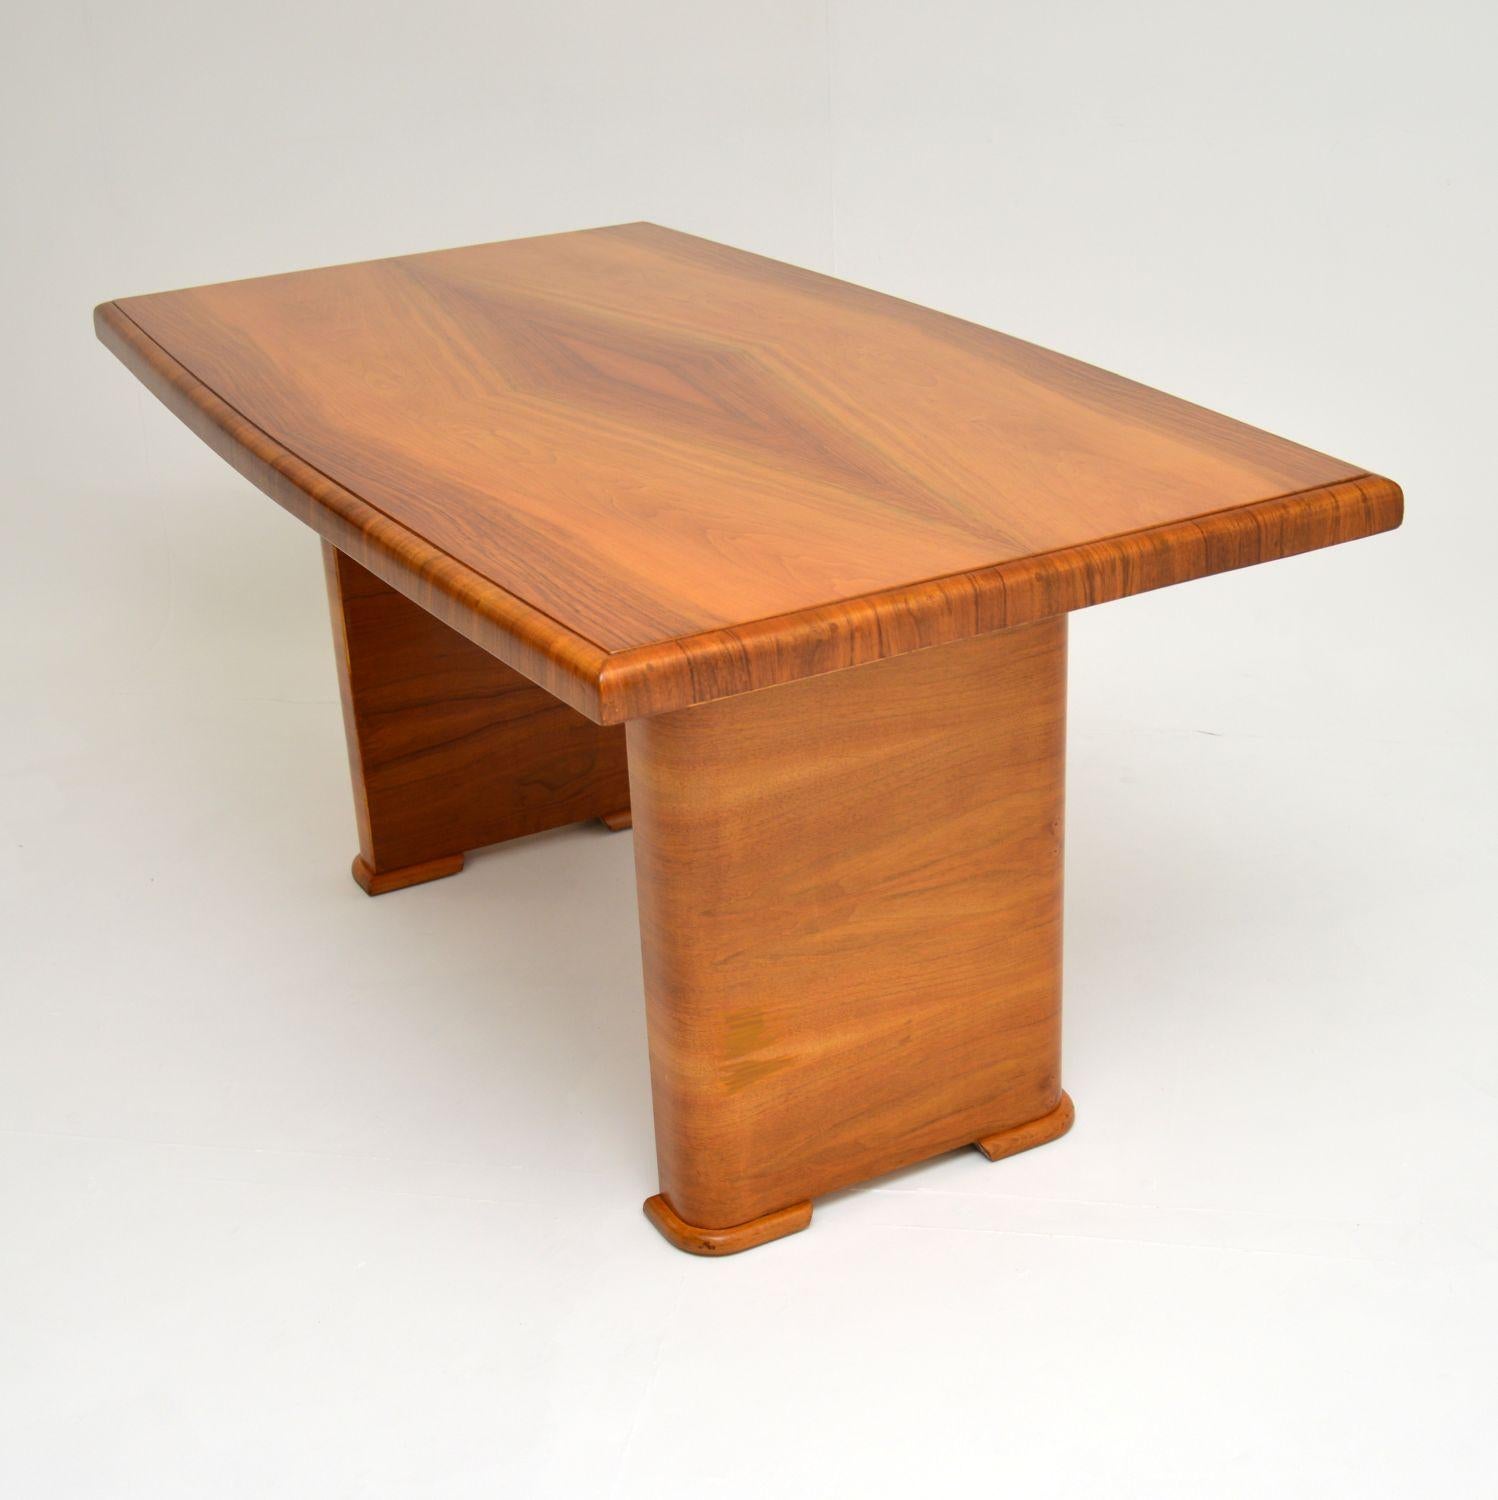 English Art Deco Figured Walnut Dining Table / Desk